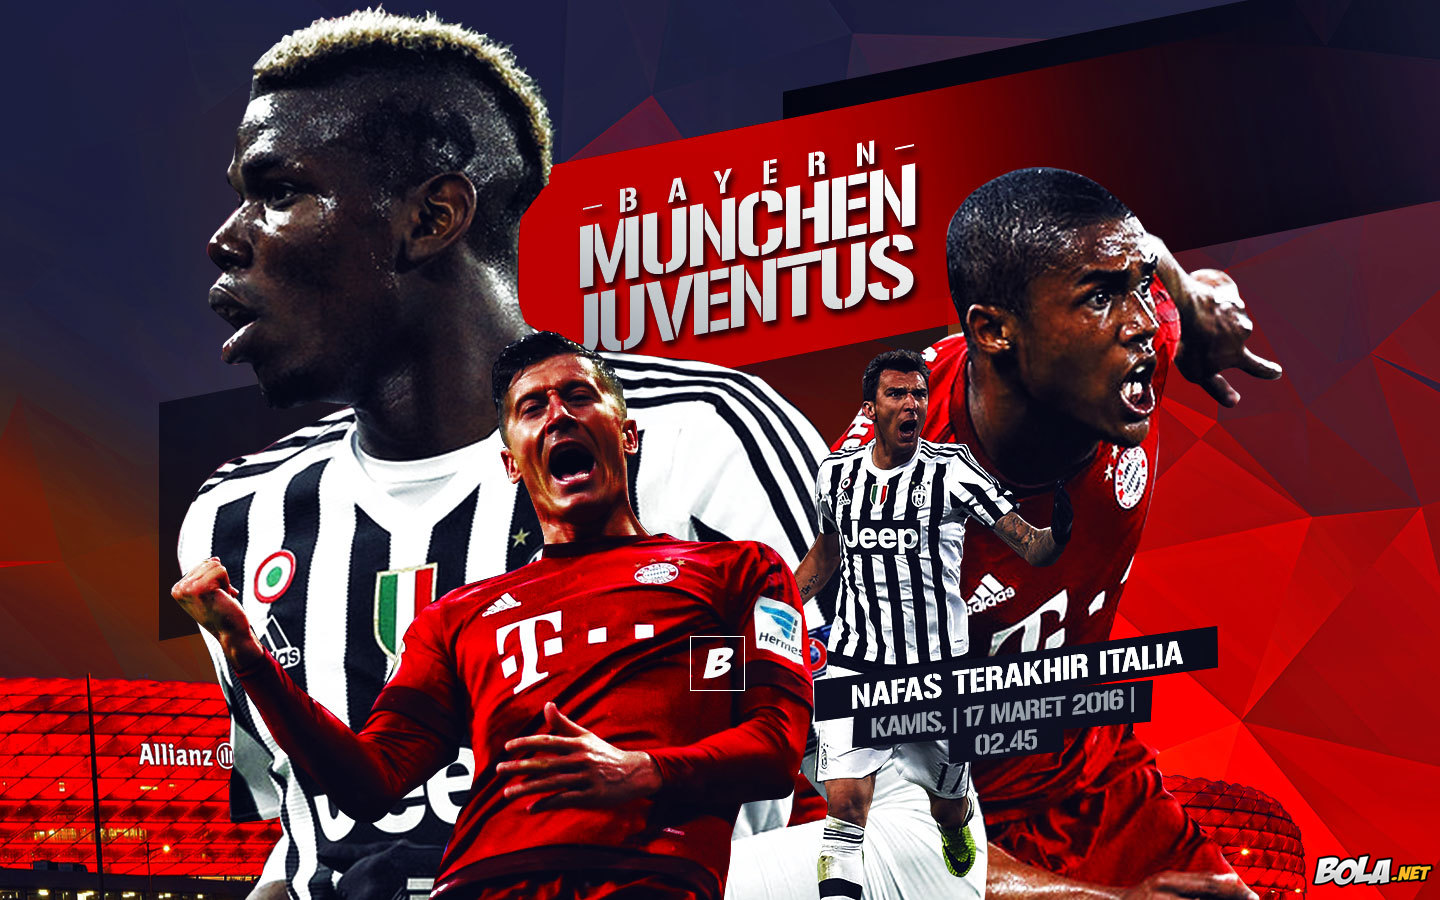 Deskripsi : Wallpaper Bayern Munchen Vs Juventus, size: 1440x900